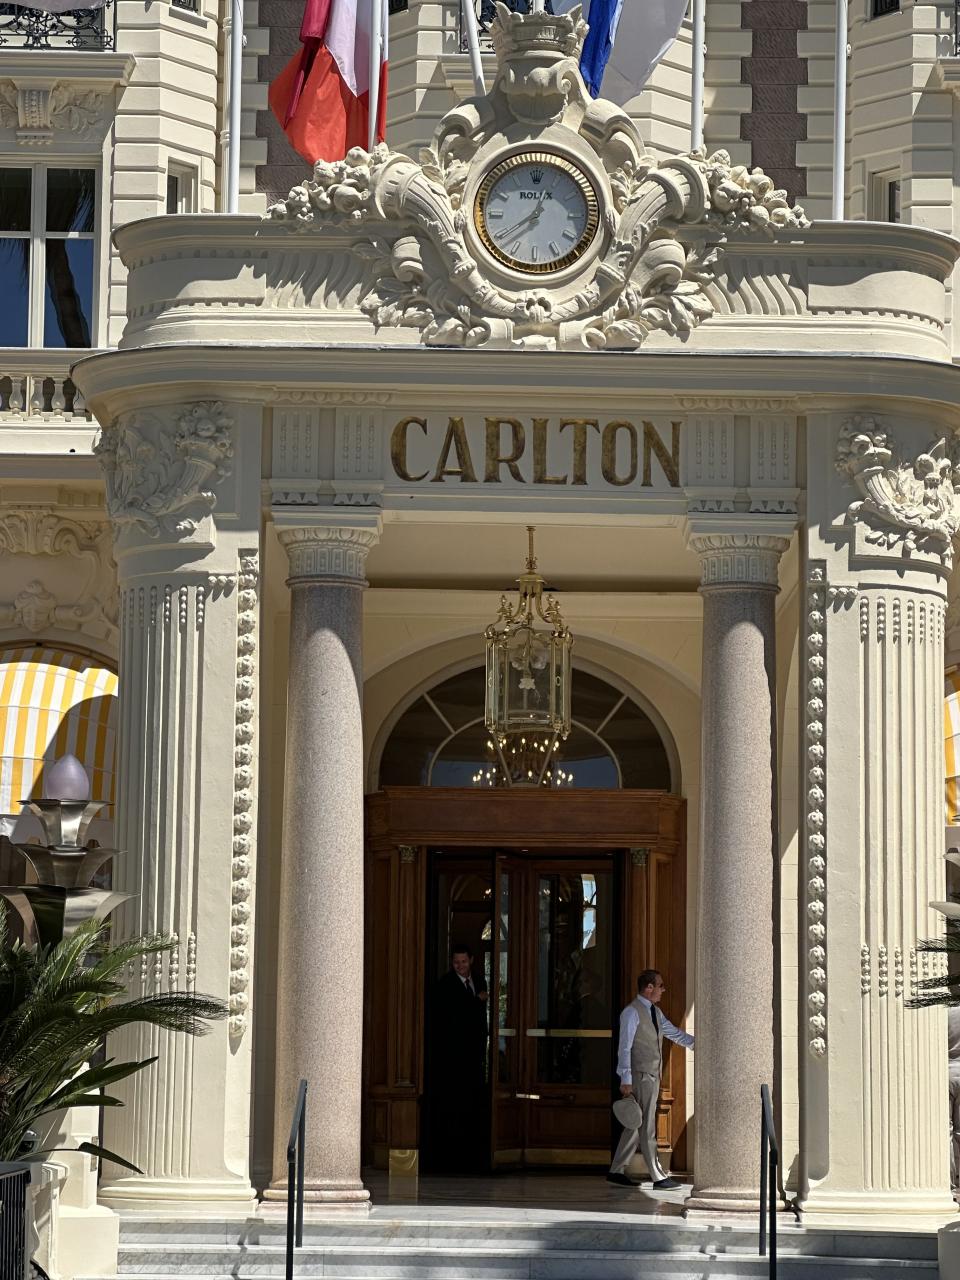 Carlton Hotel’s grand entrance